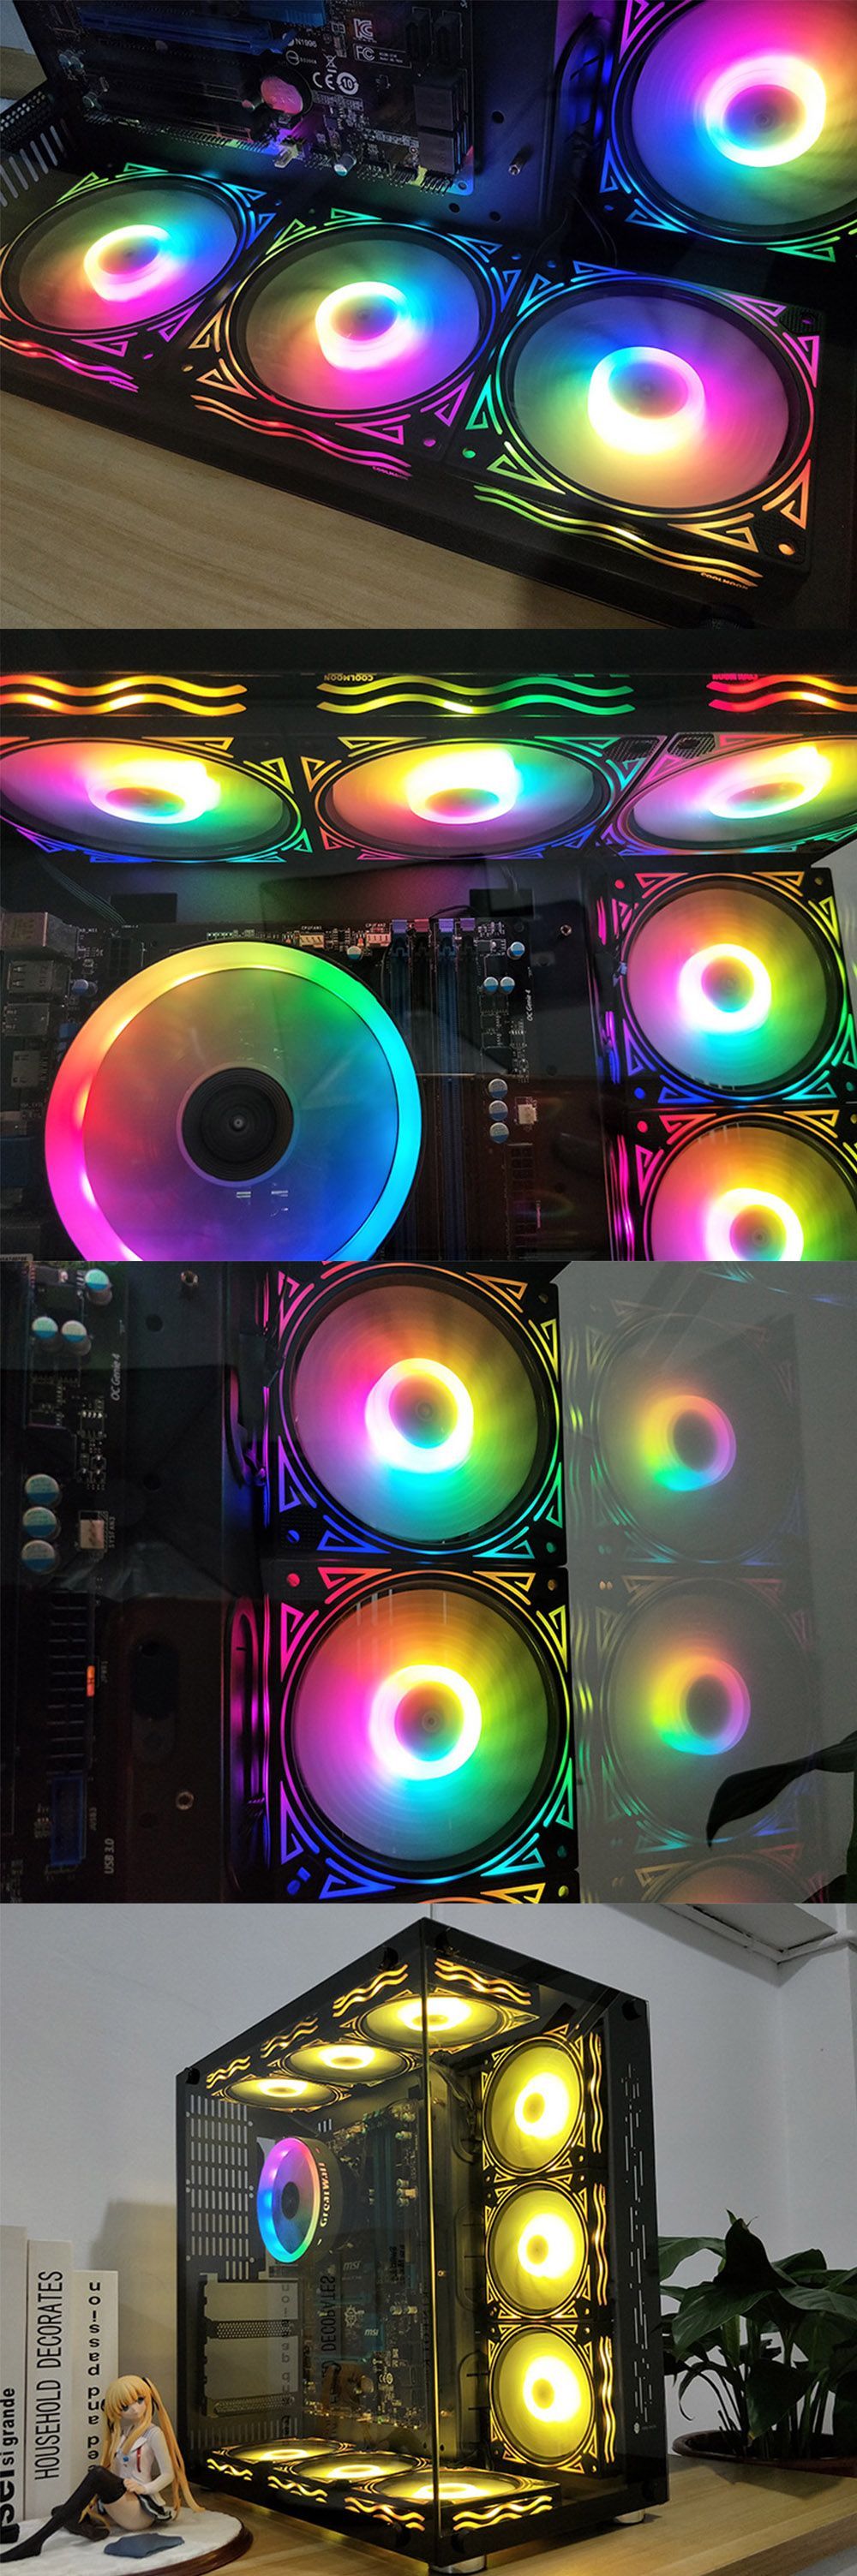 Coolmoon-BILLOW-4PCS-120mm-Multilayer-Backlit-RGB-Cooling-PC-Fans-Mute-Computer-PC-Case-Cooling-Fan--1580359